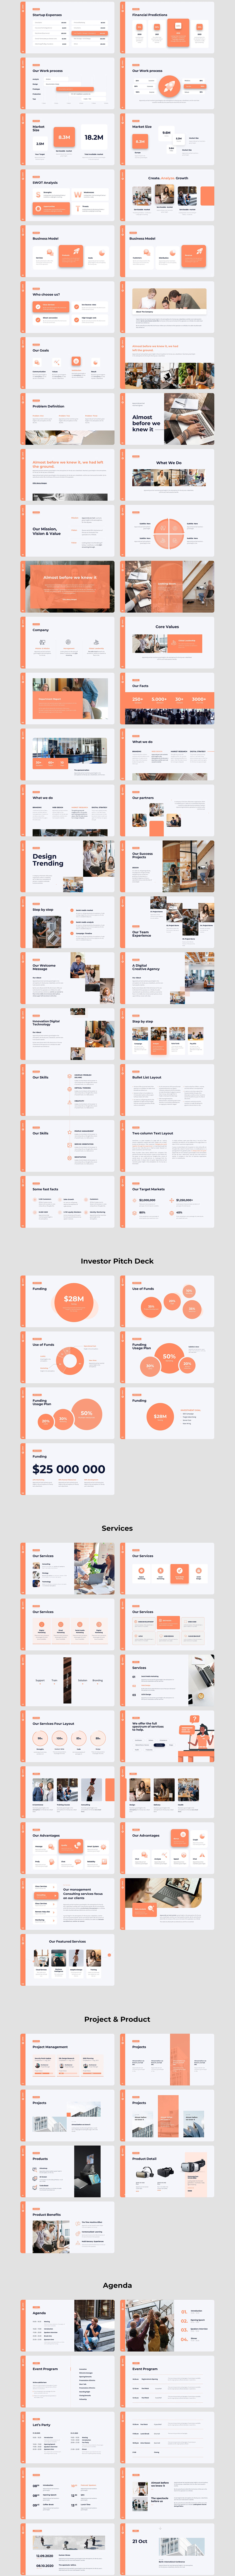 investor pitch deck pitch pitch deck Pitch Deck Presentation Pitch Deck Template Powerpoint powerpoint template PPT presentation sales pitch deck